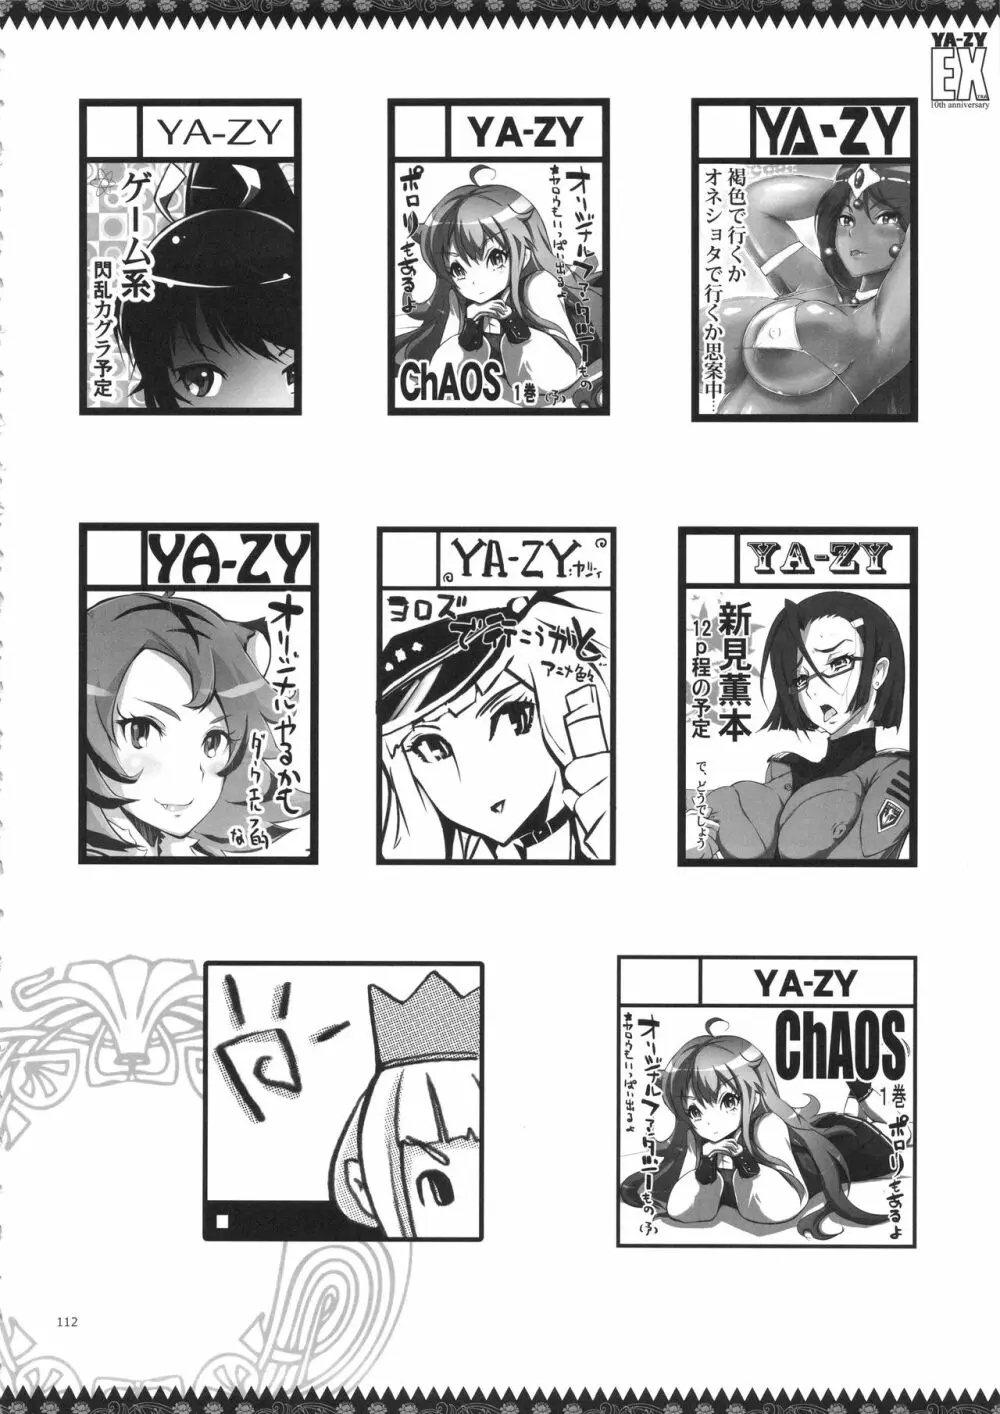 YA-ZY EX 10th anniversary 111ページ